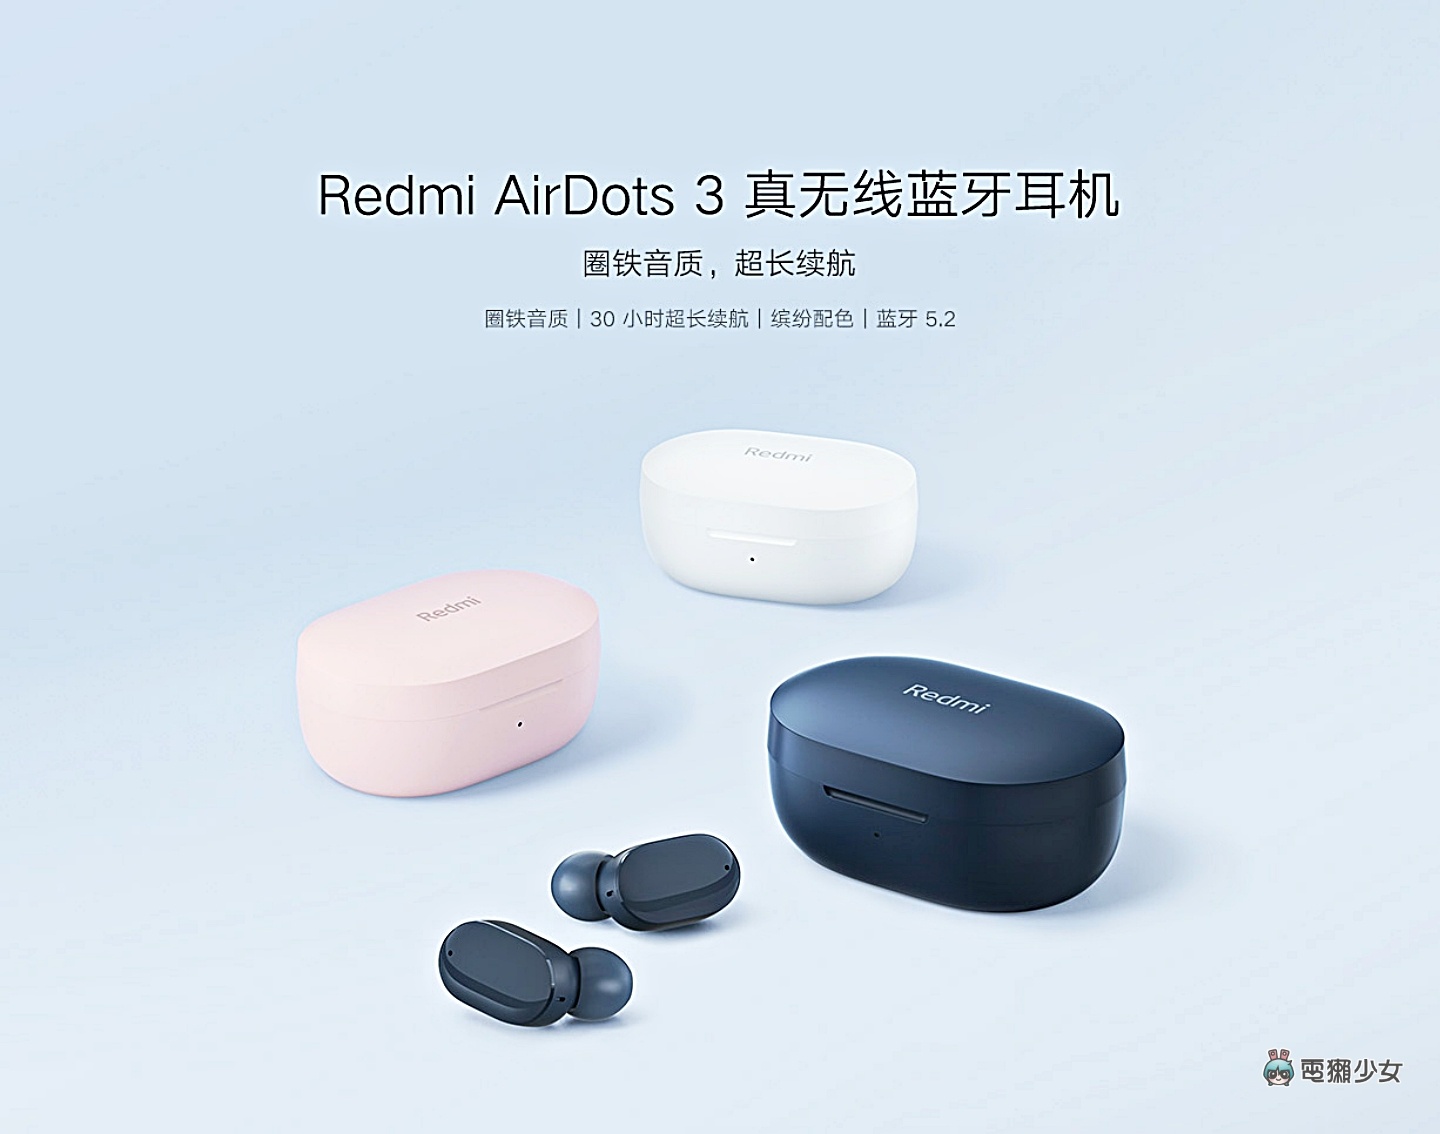 『 Redmi K40 』系列新機正式發表！支援 120Hz 螢幕更新率，同步推出新款真無線藍牙耳機 Redmi AirDots 3